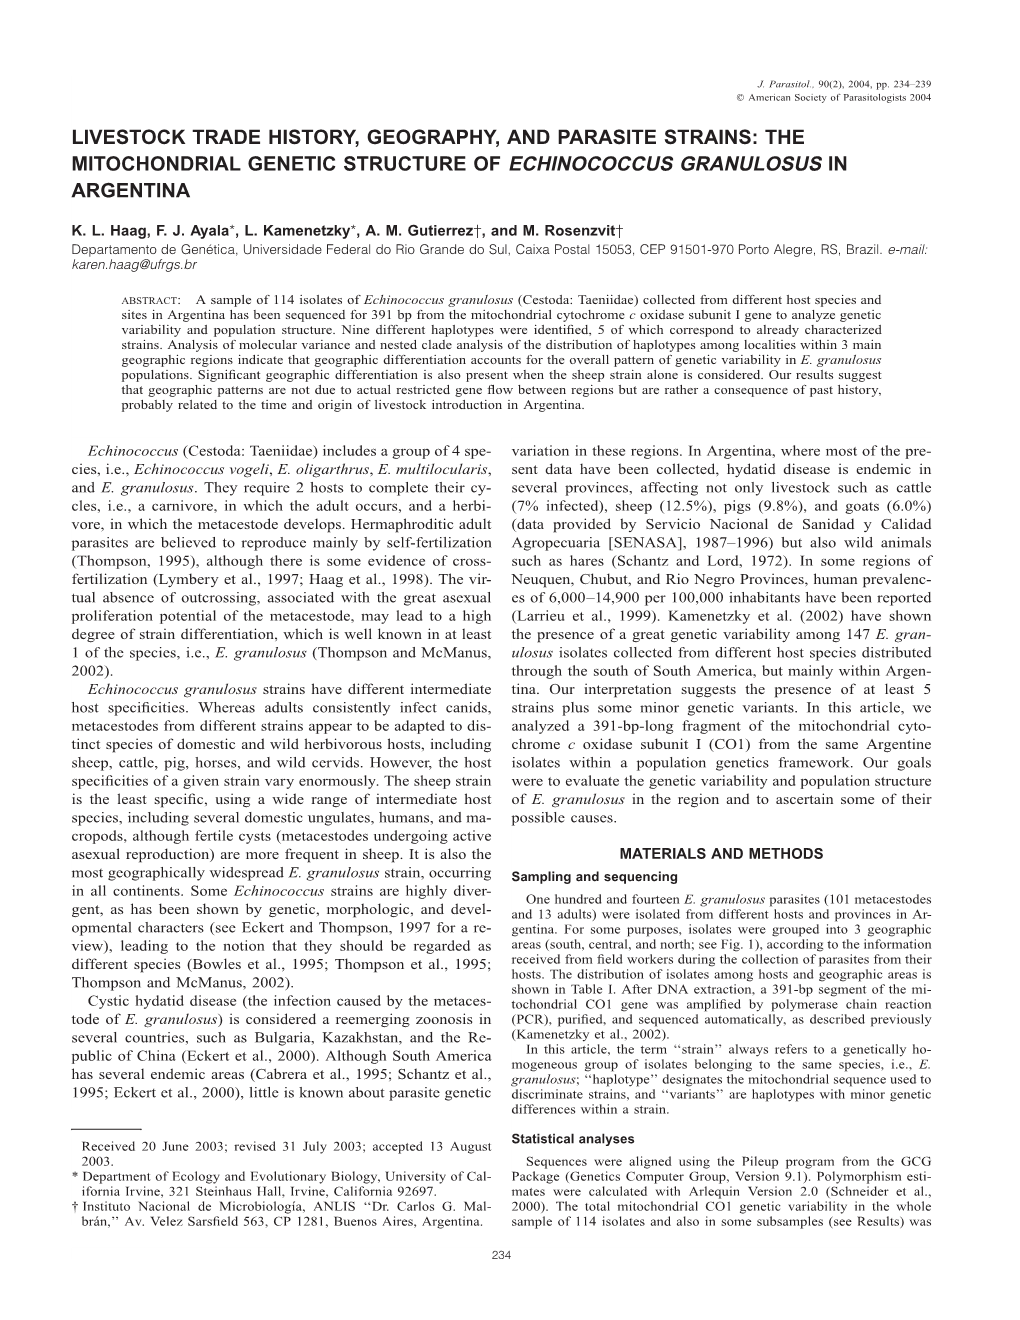 The Mitochondrial Genetic Structure of Echinococcus Granulosus in Argentina